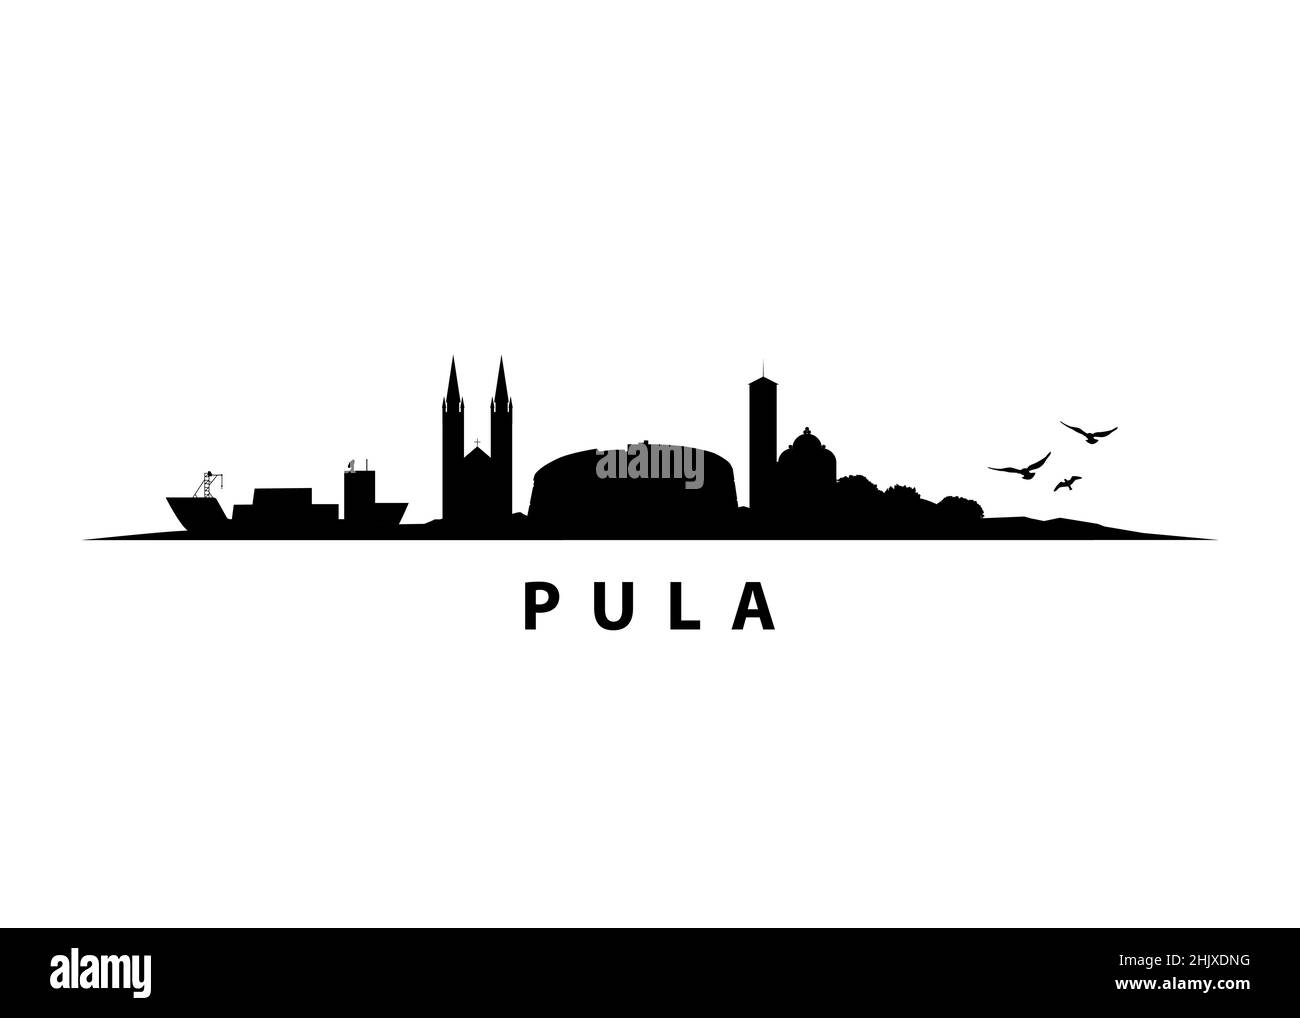 Pula Croatia City Skyline Landscape Black Shape Silhouette Graphic Stock Vector